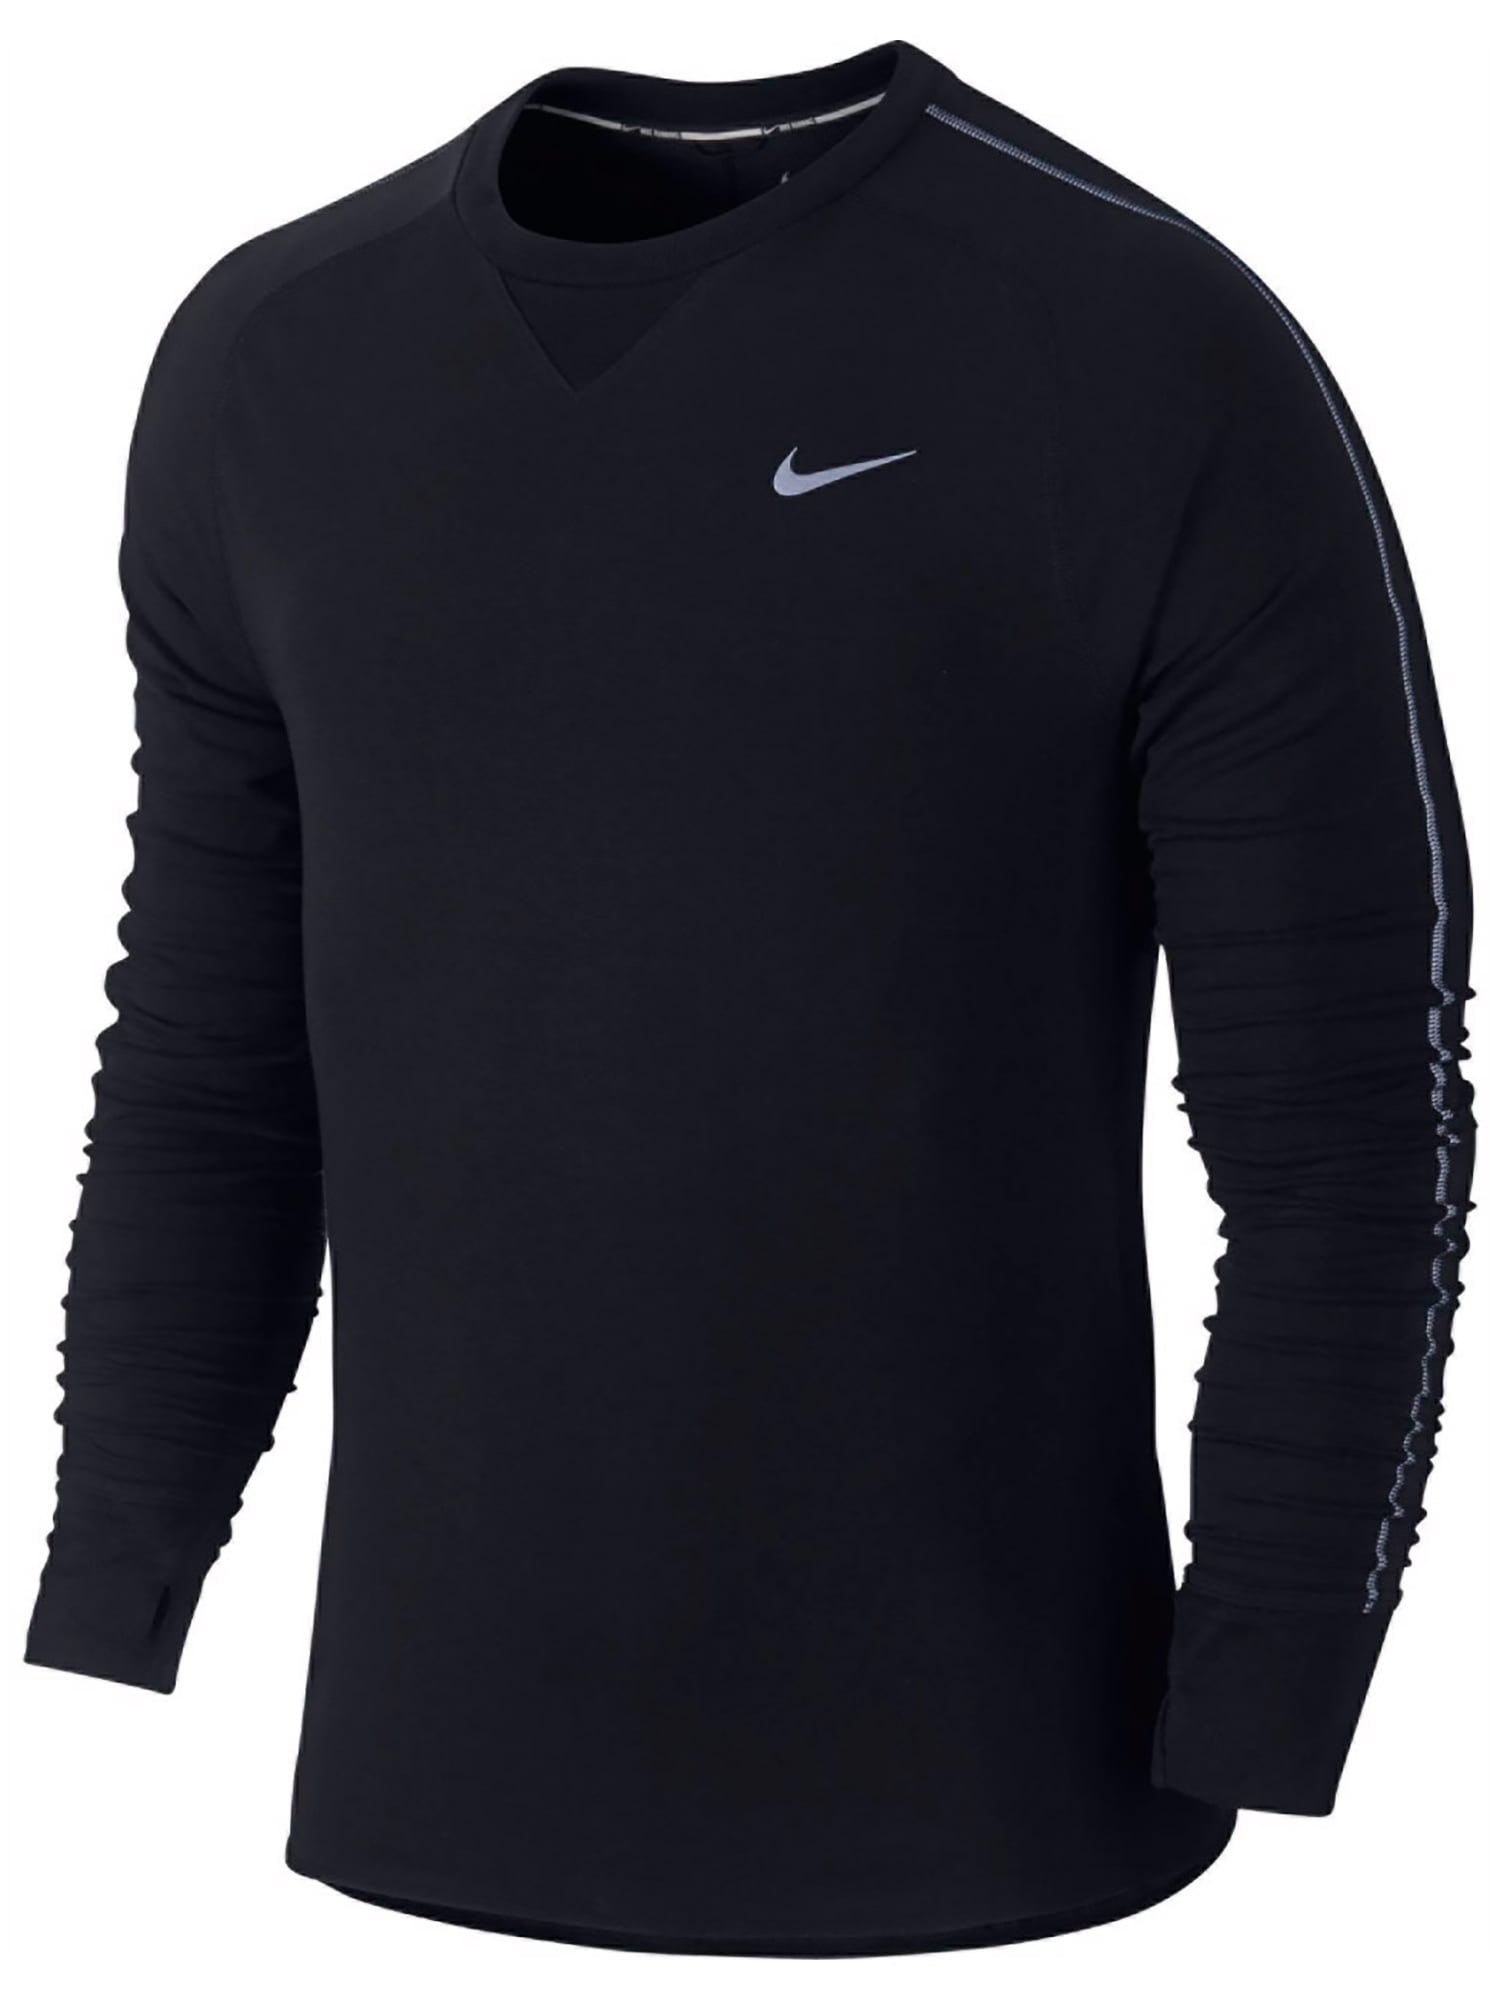 Nike Men's Dri-FIT Sprint Crew Running Shirt, Black, Medium - Walmart.com